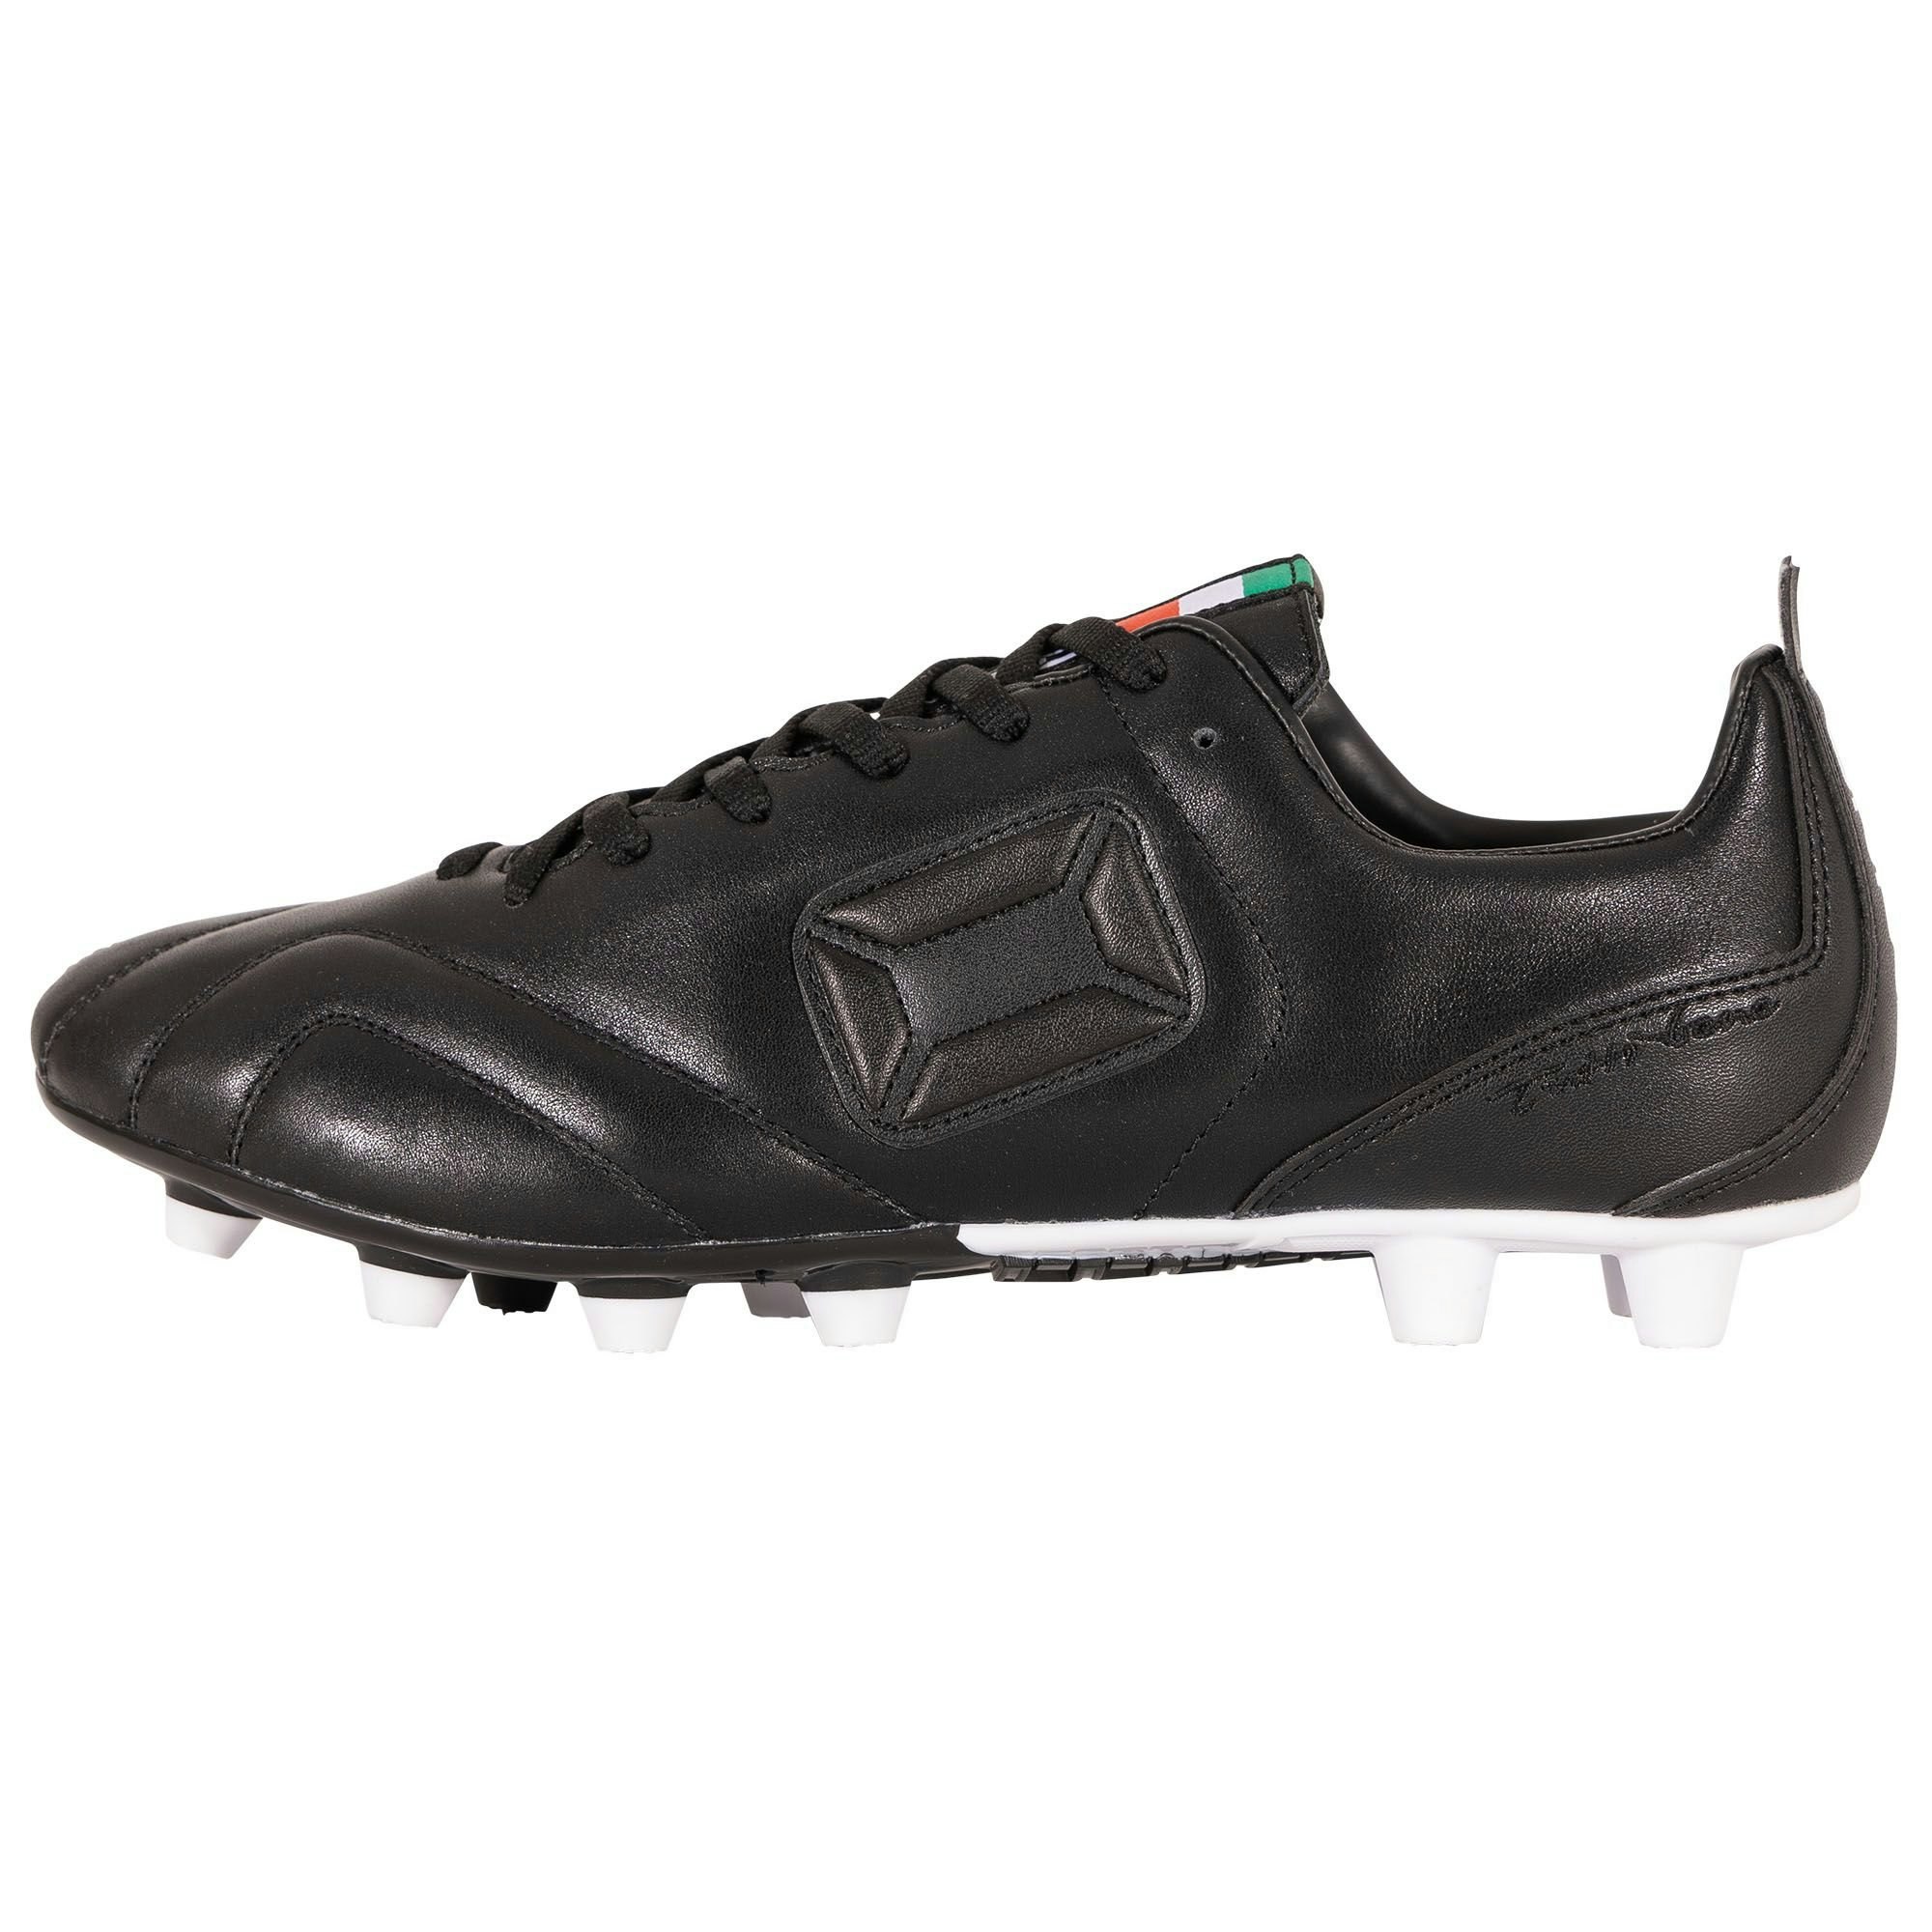 FK Ä/L Nibbio Nero Firm Ground Football Shoes